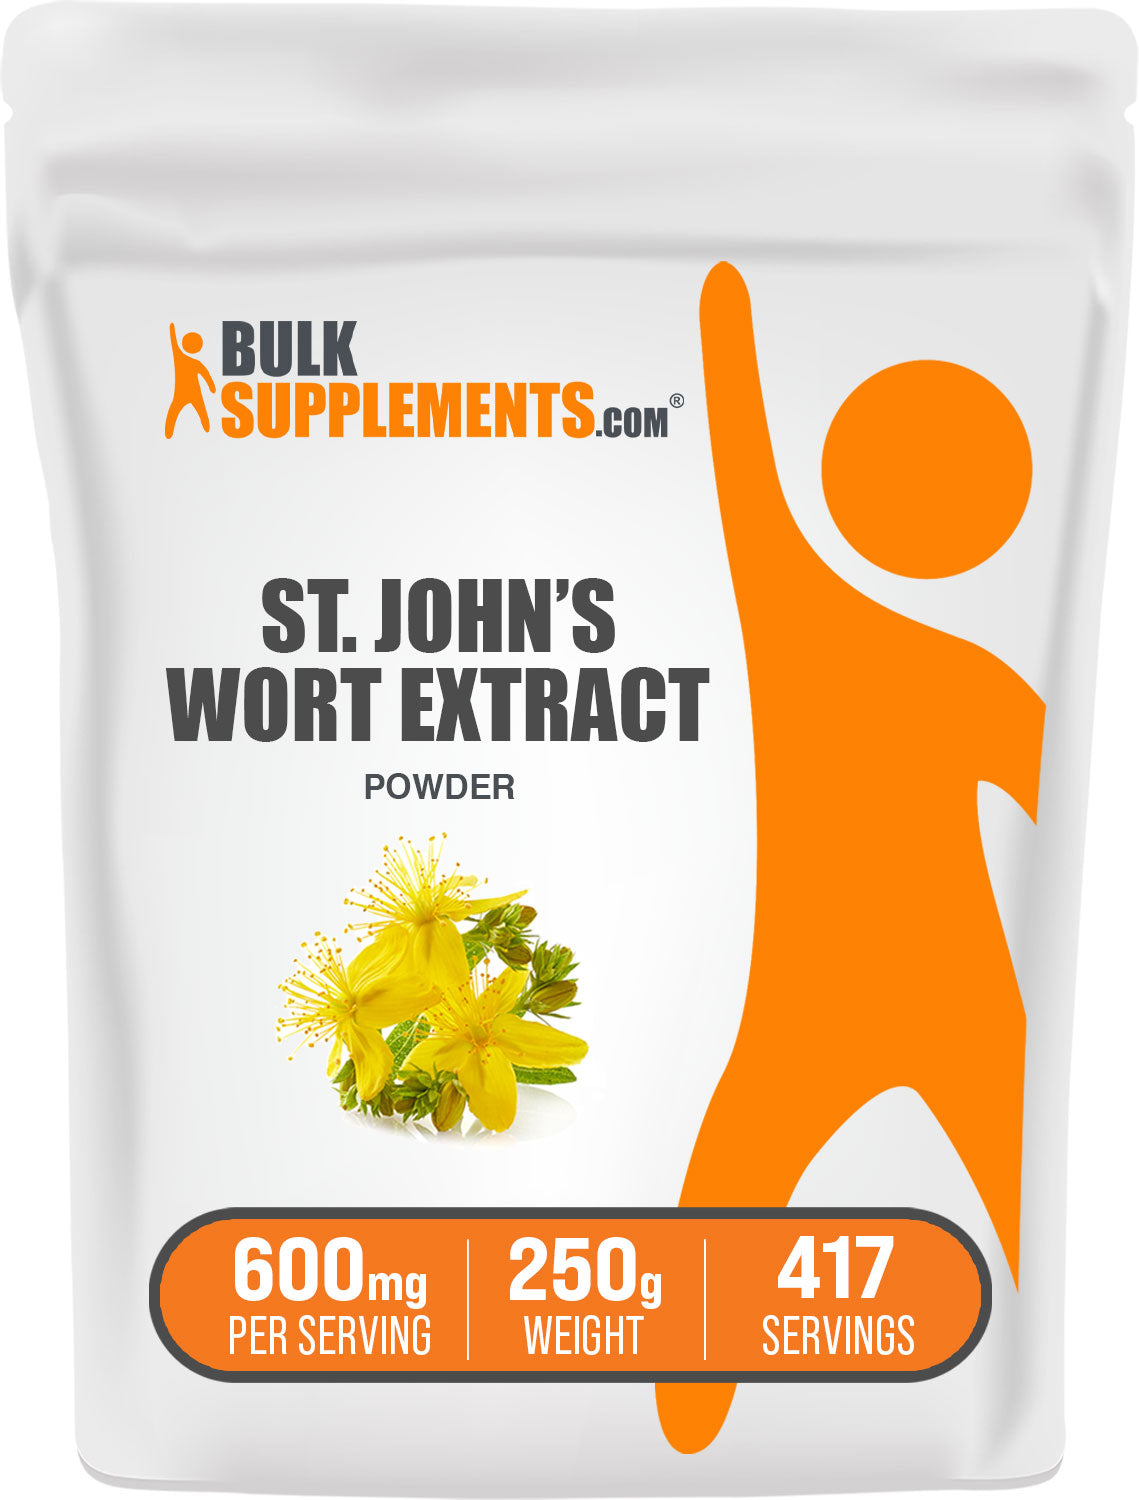 BulkSupplements.com St. John's Wort Extract Powder 250g Bag